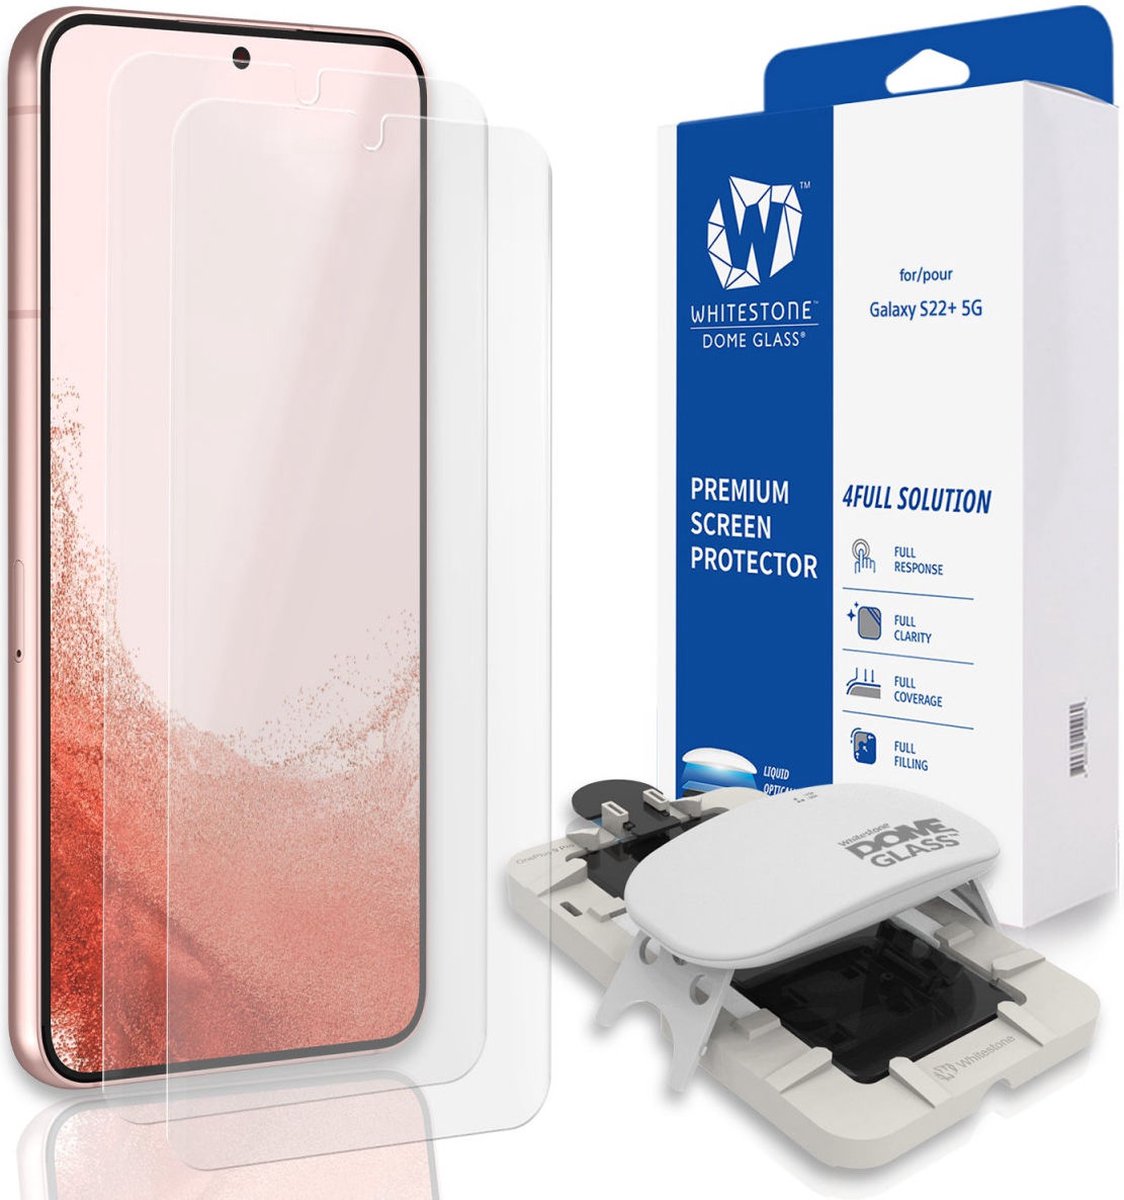 Whitestone Dome Glass Samsung Galaxy S22 Plus Screen Protector 2-Pack